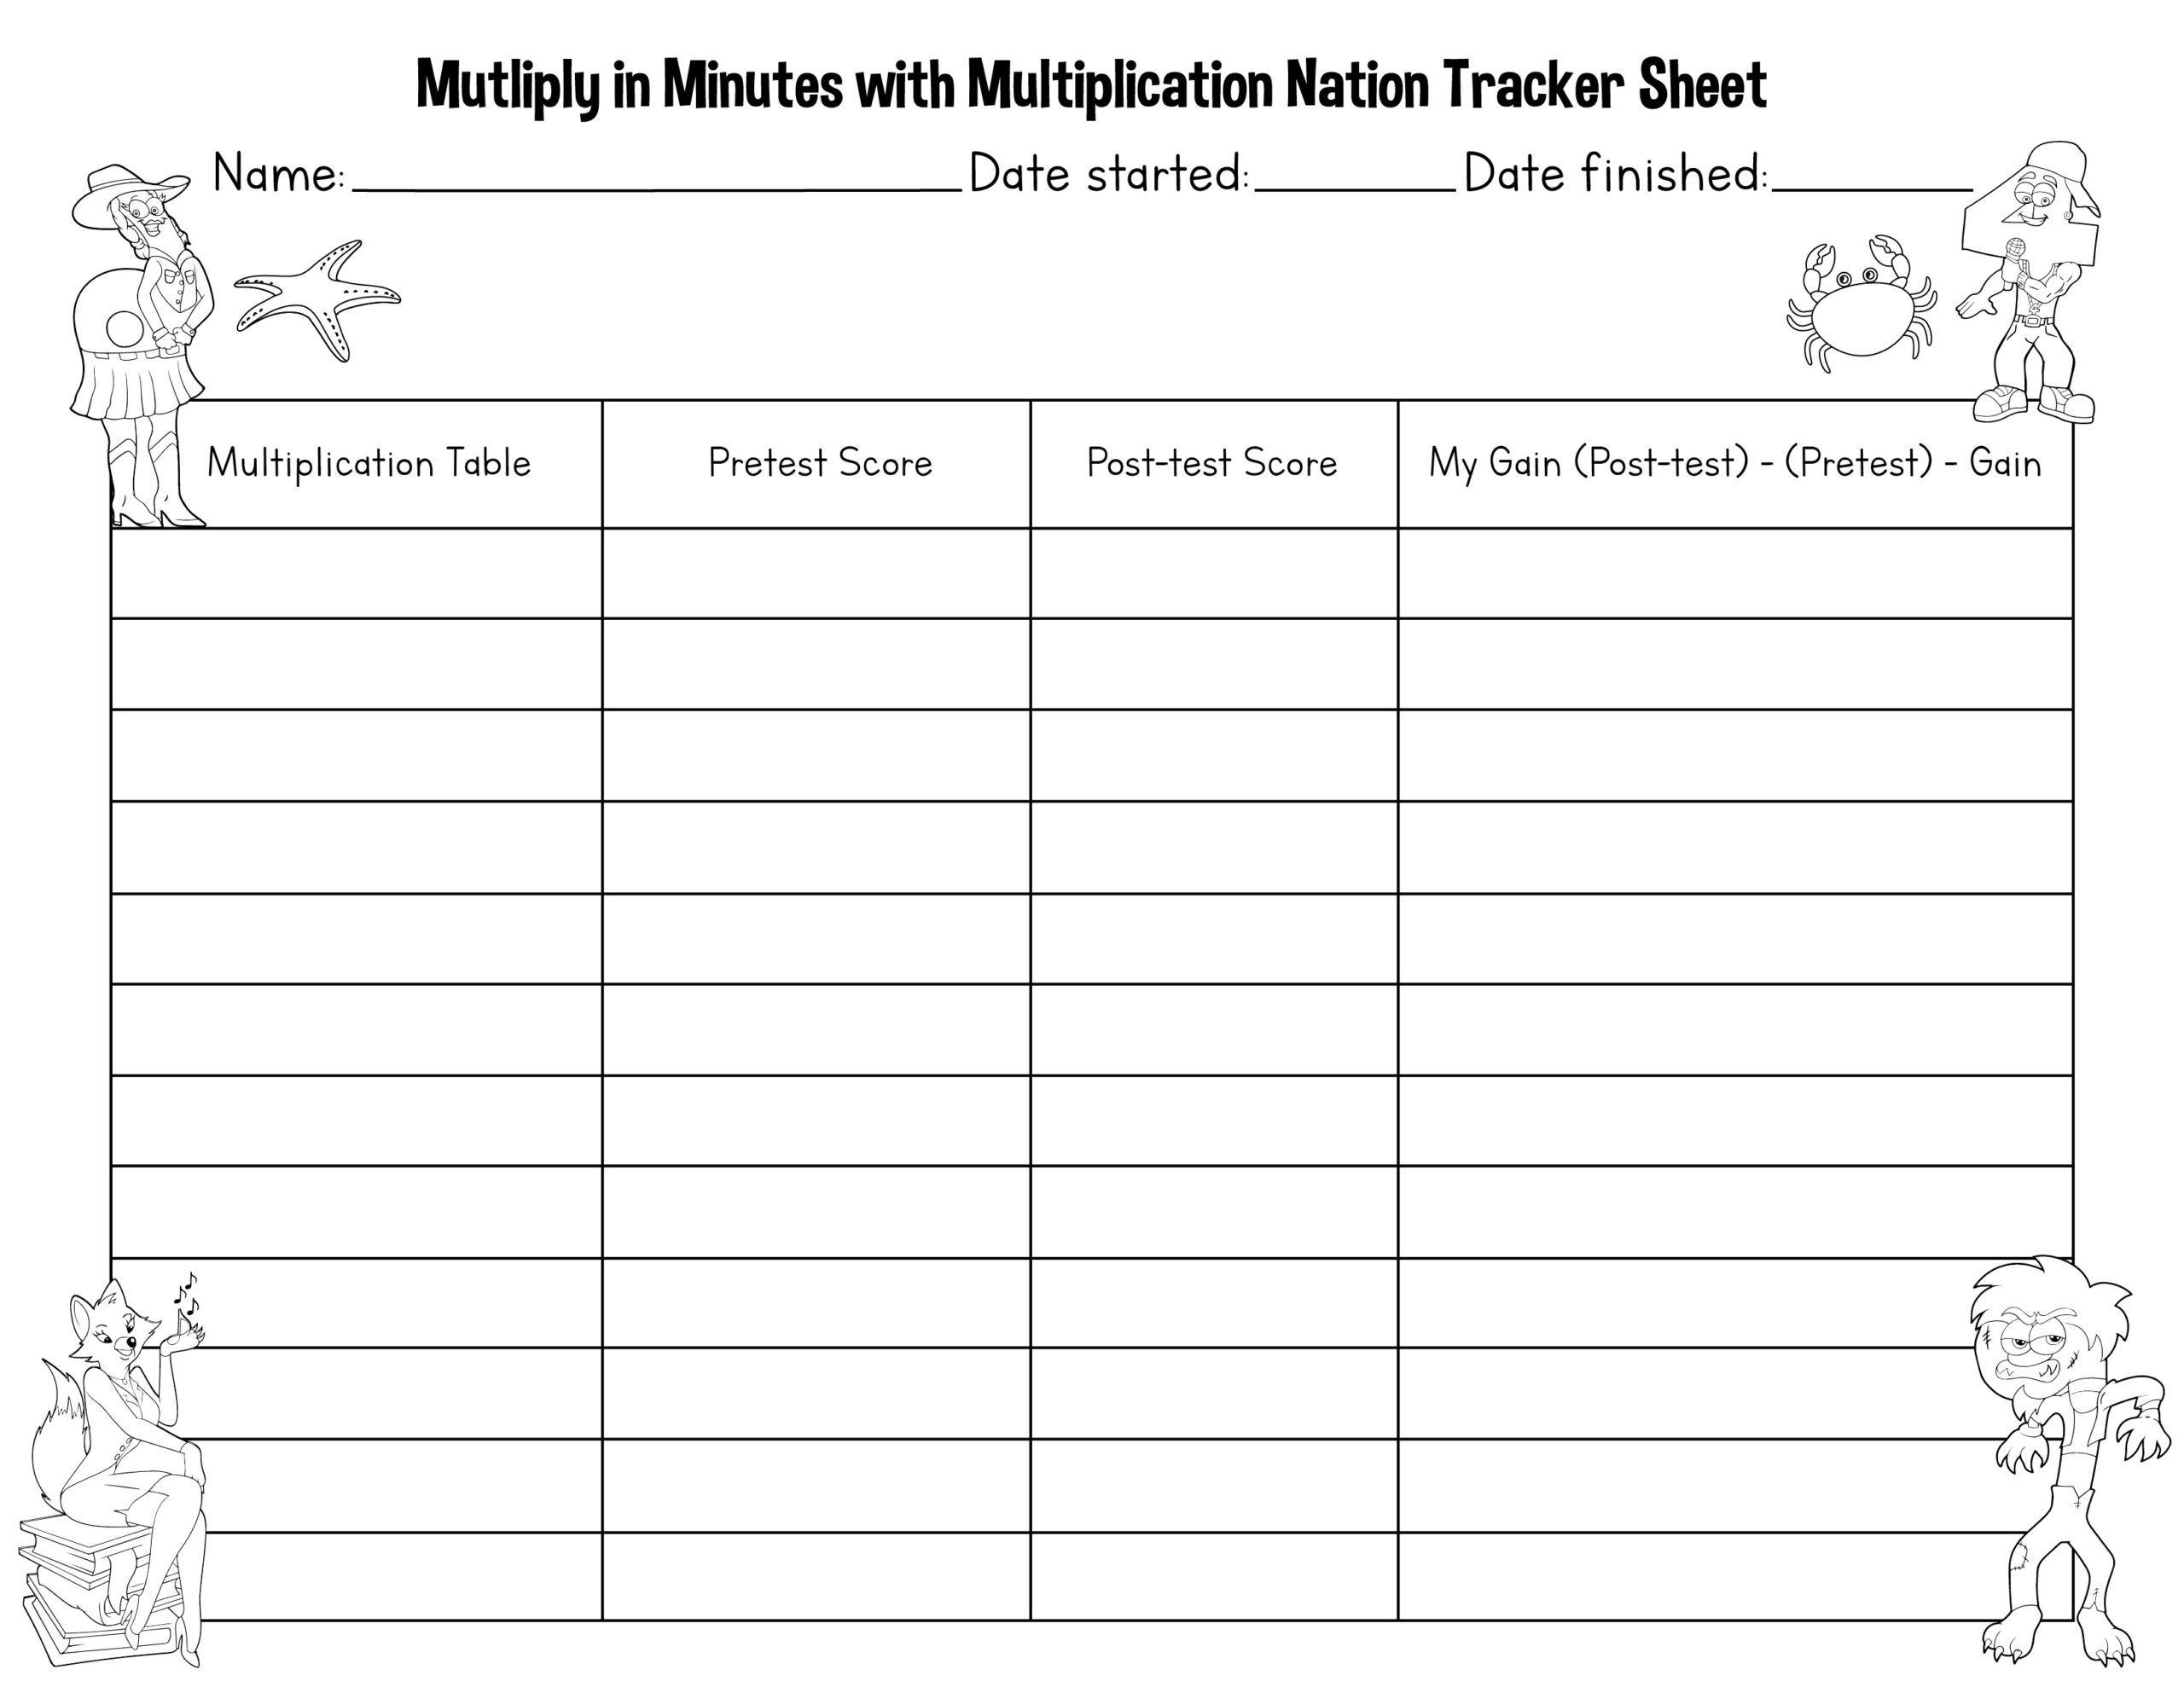 Multipication Tracking Sheet